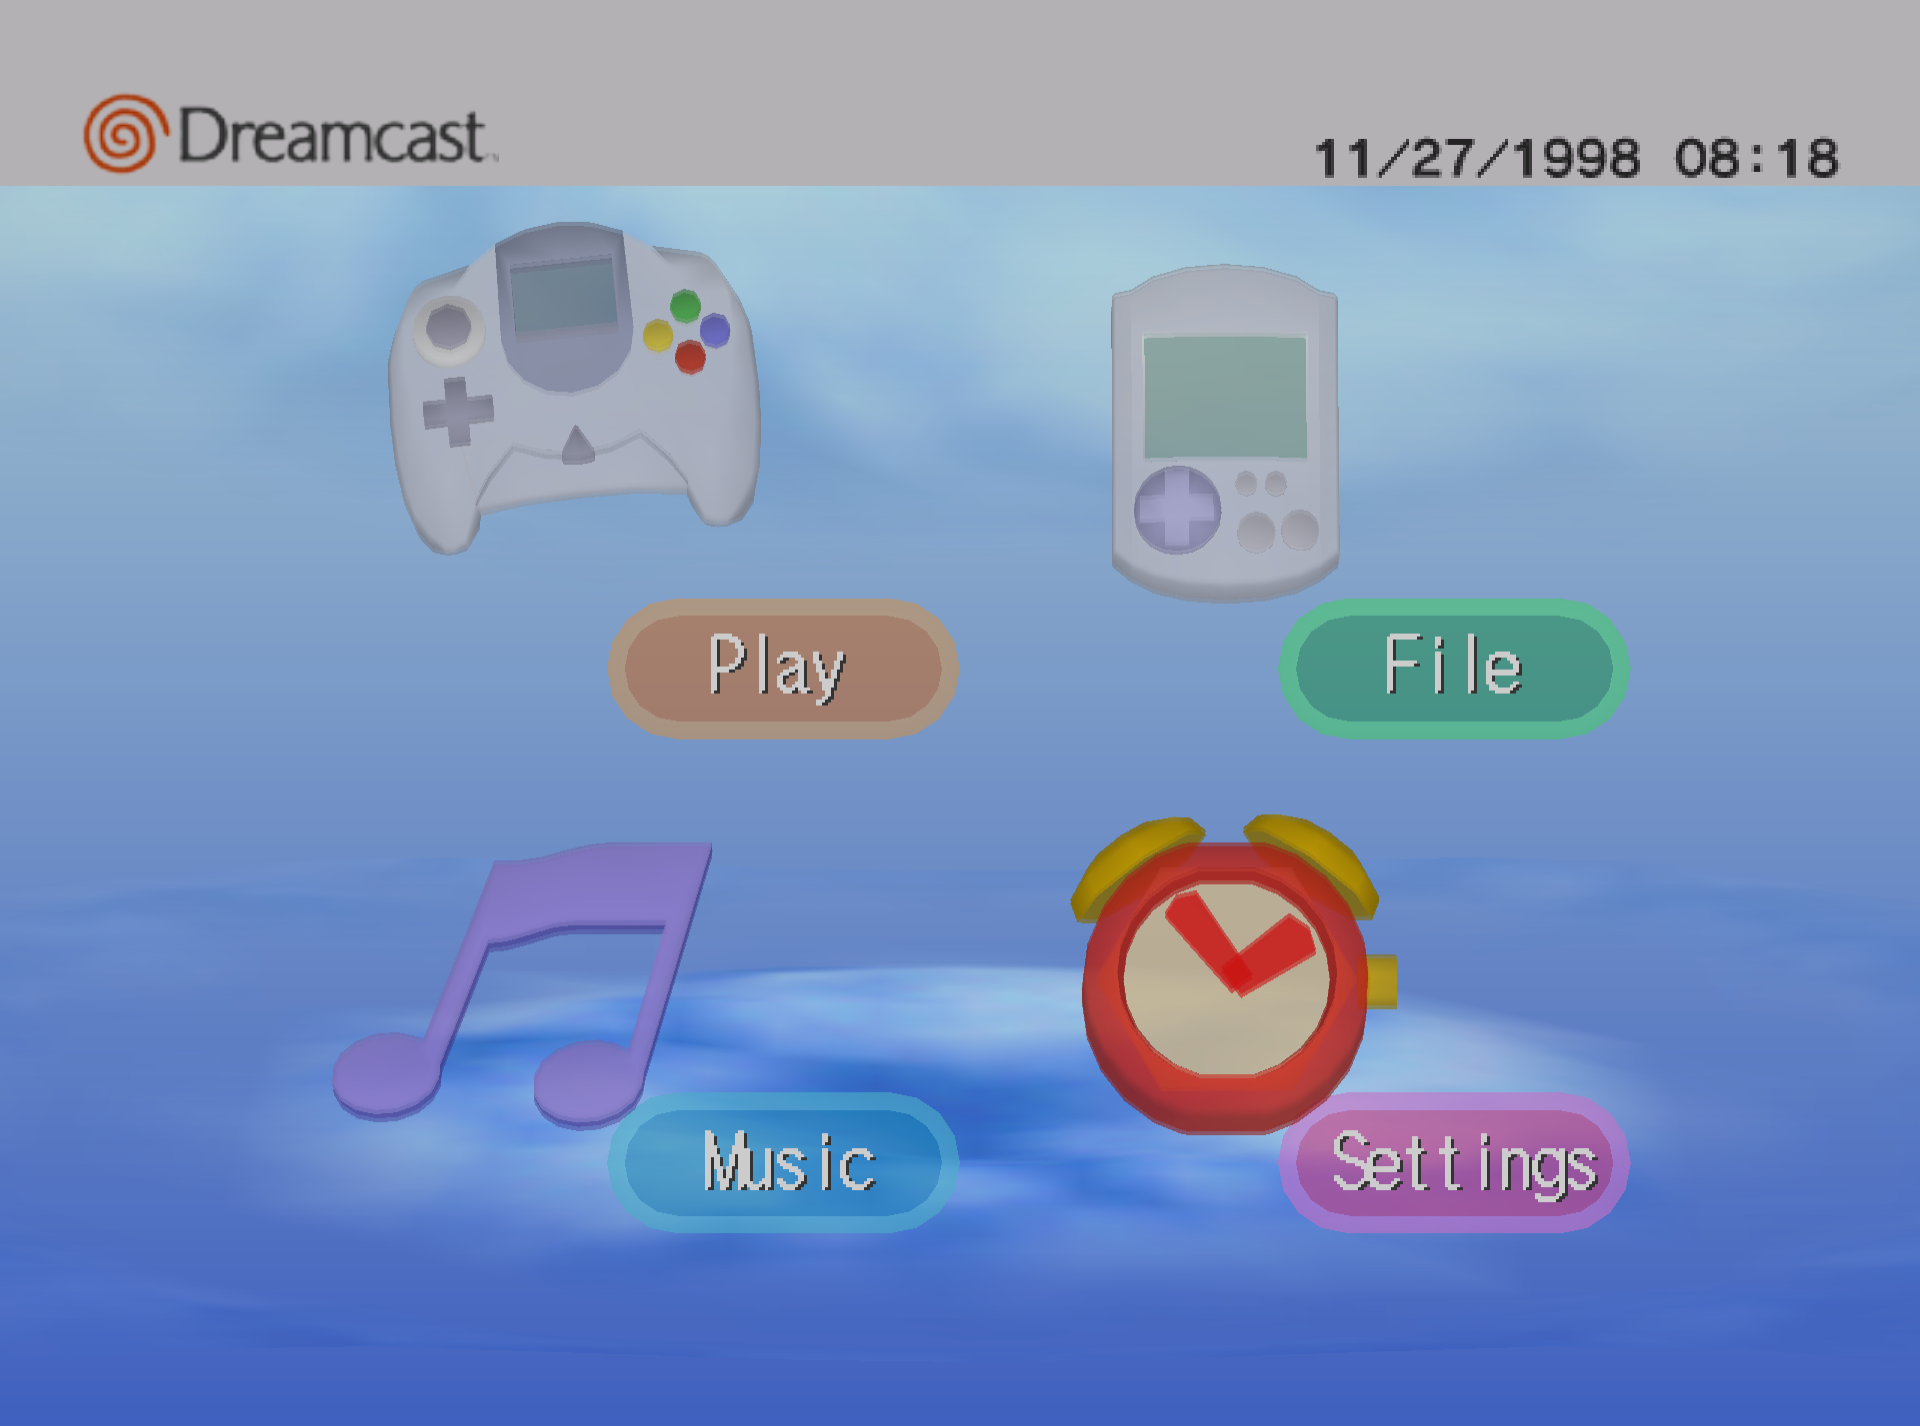 Dreamcast Bios Menu